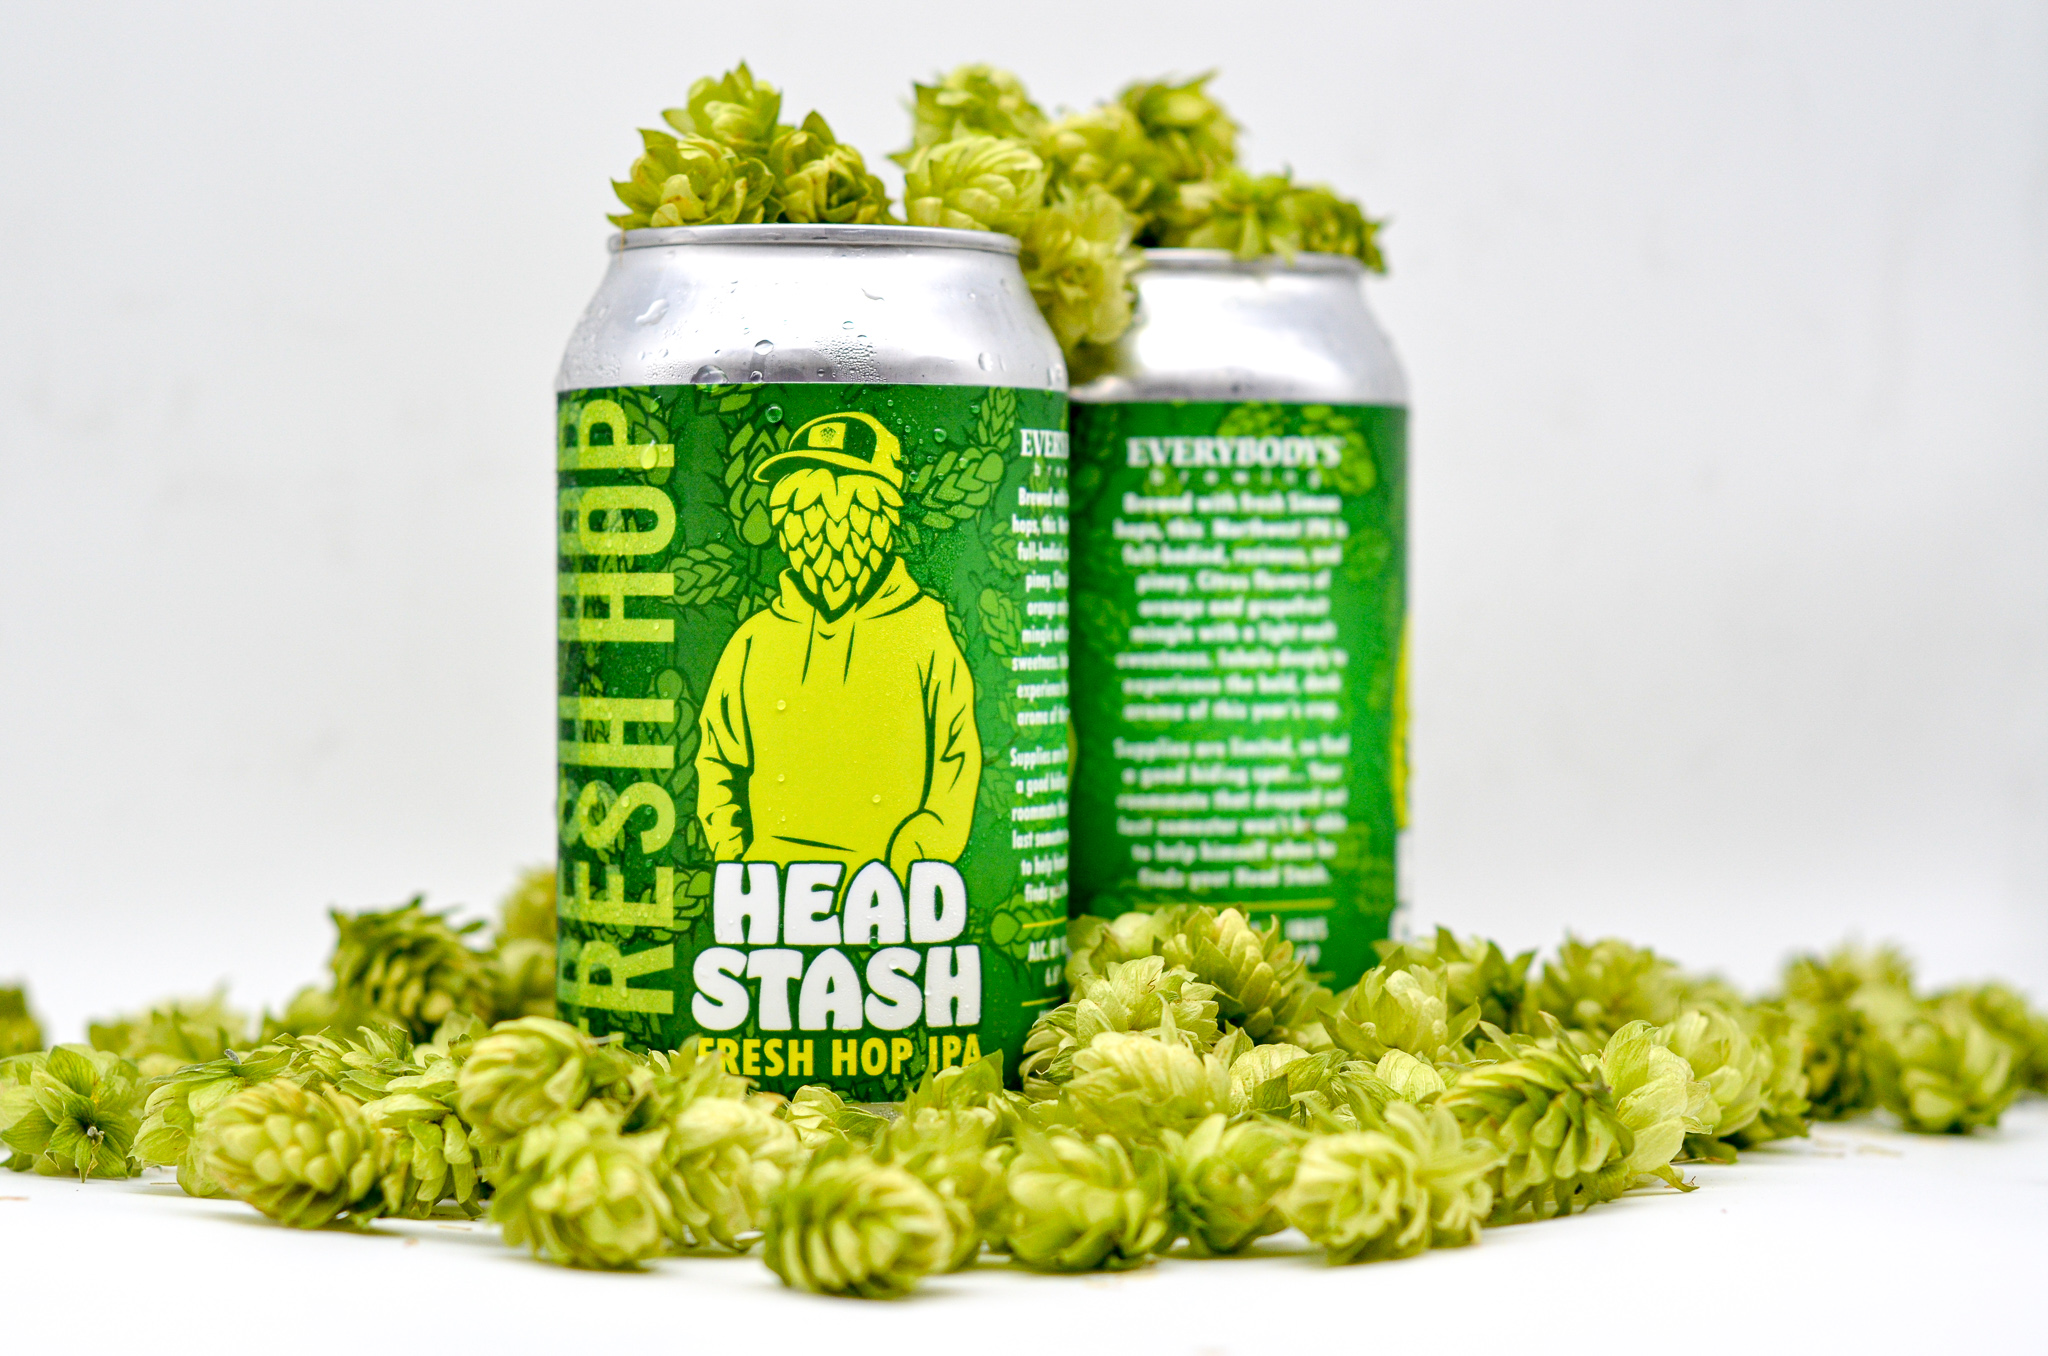 Everybody's Brewing Head Stash Fresh Hop IPA